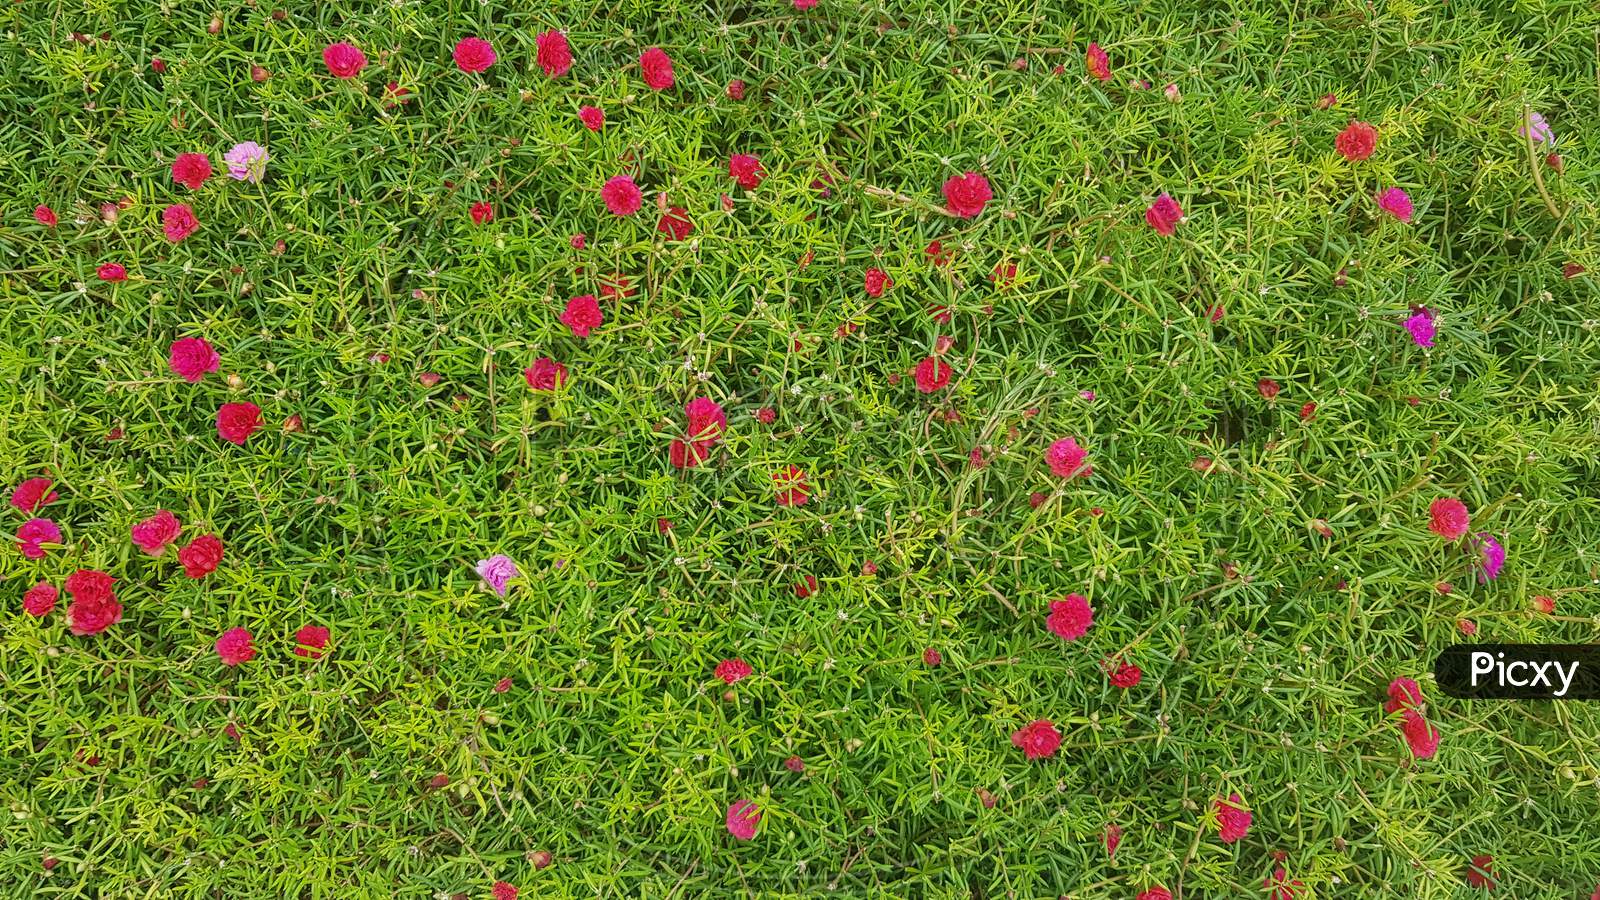 Moss rose is beautiful garden plant